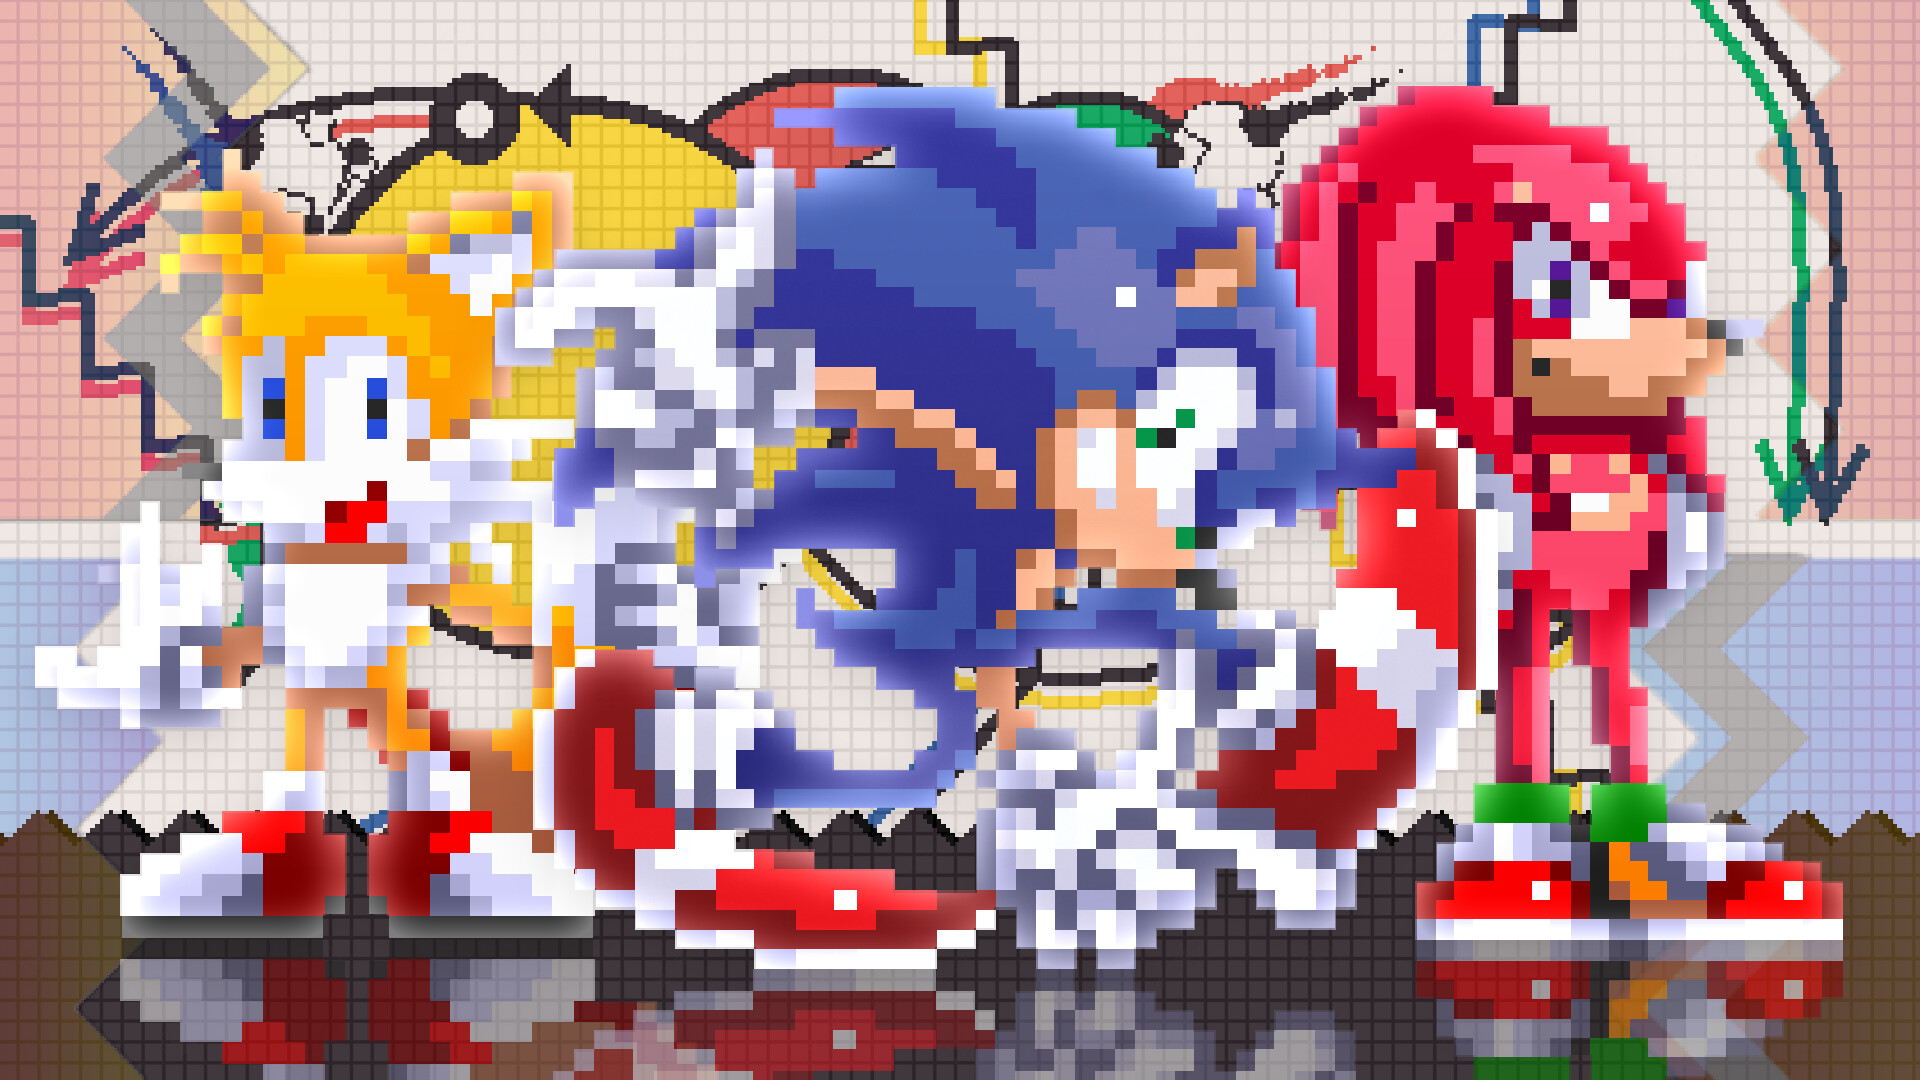 Modgen Classic Sonic & Tails - Sonic 3 A.I.R. 